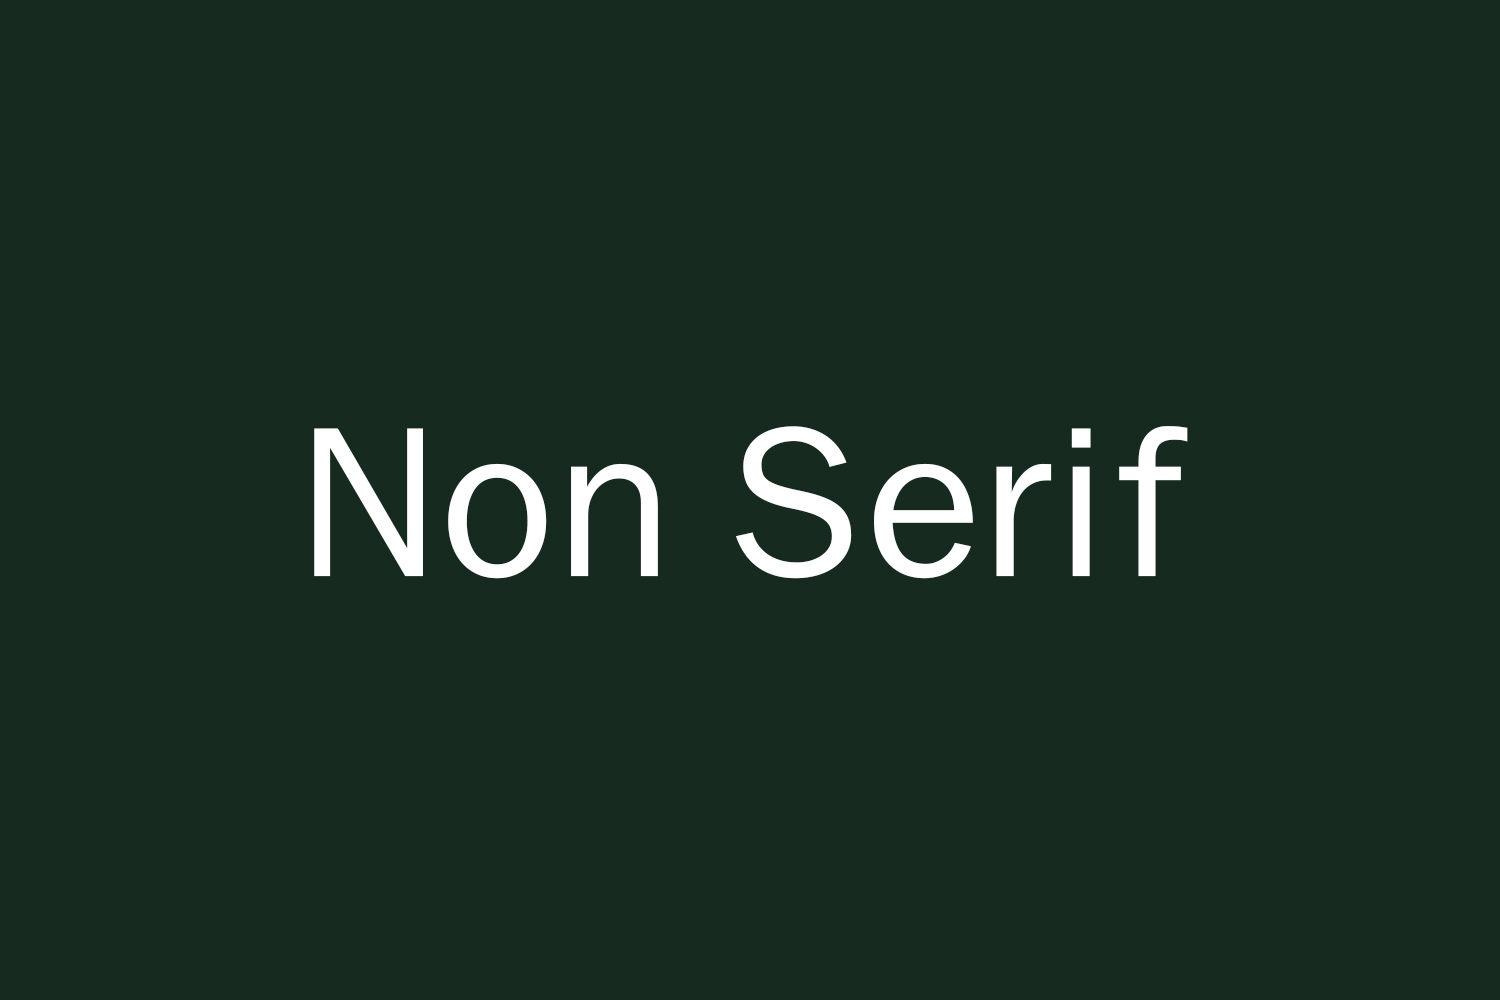 Non Serif Free Font